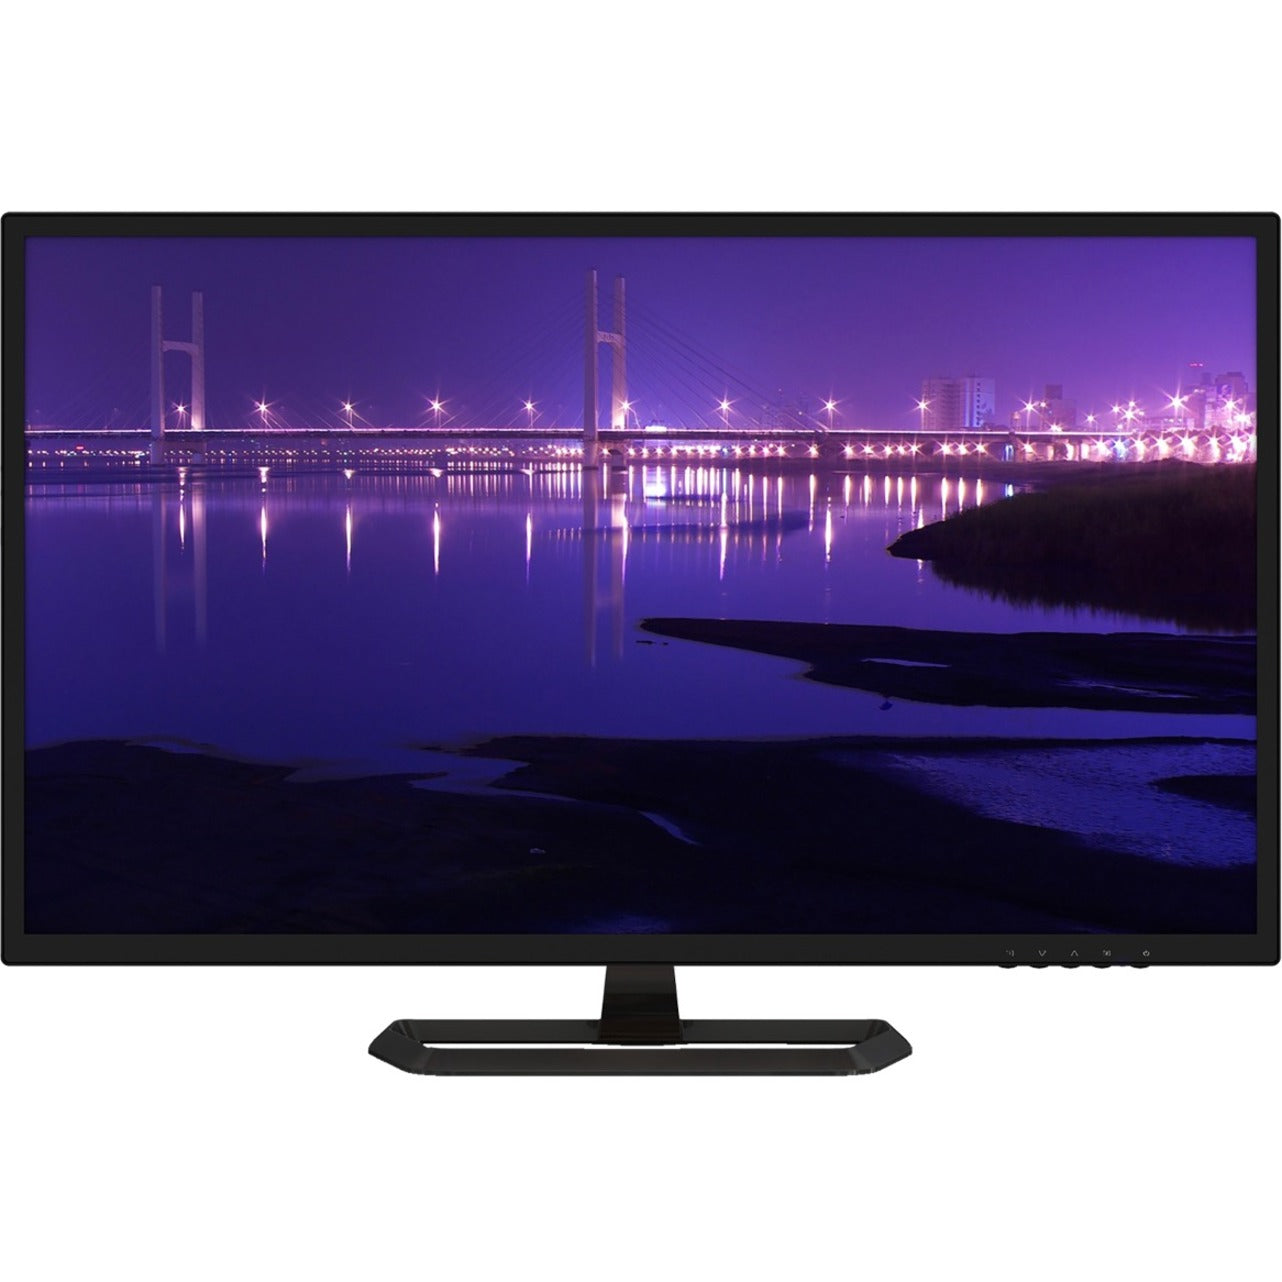 Planar 997-8425-01 PXL3280W 31.5" WQHD LCD Monitor, 1.07 Billion Colors, 2560 x 1440, 3 Year Warranty